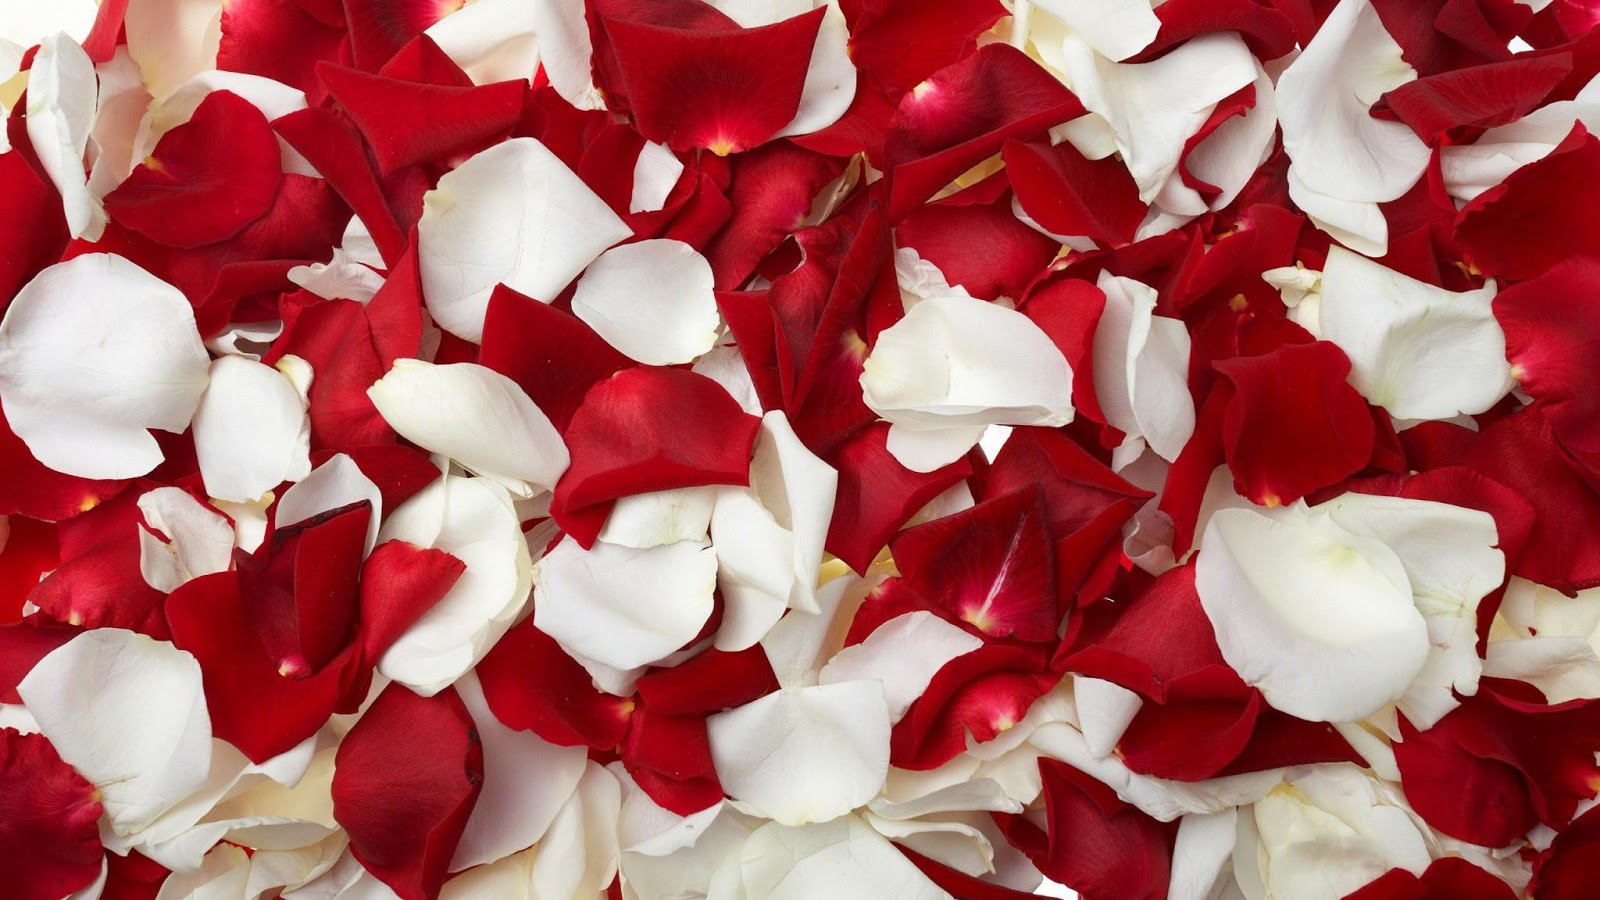 Red Rose Petals And Flowers Wallpaper - Rose Petals Images Hd - HD Wallpaper 